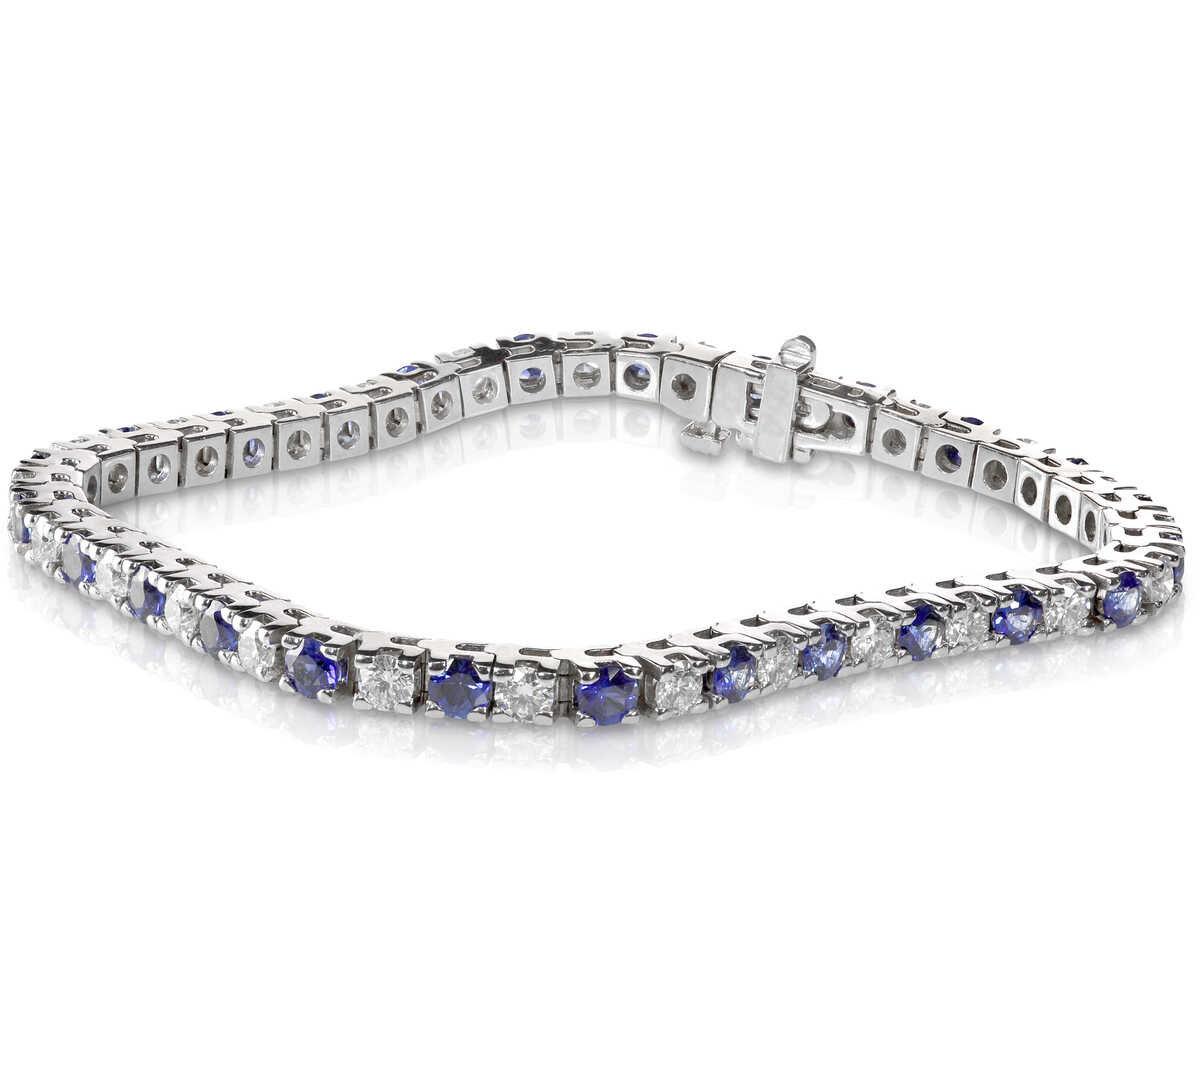 diamond-and-sapphire-tennis-bracelet-2021-08-26-17-11-30-utc-(1)-(1)_optimized